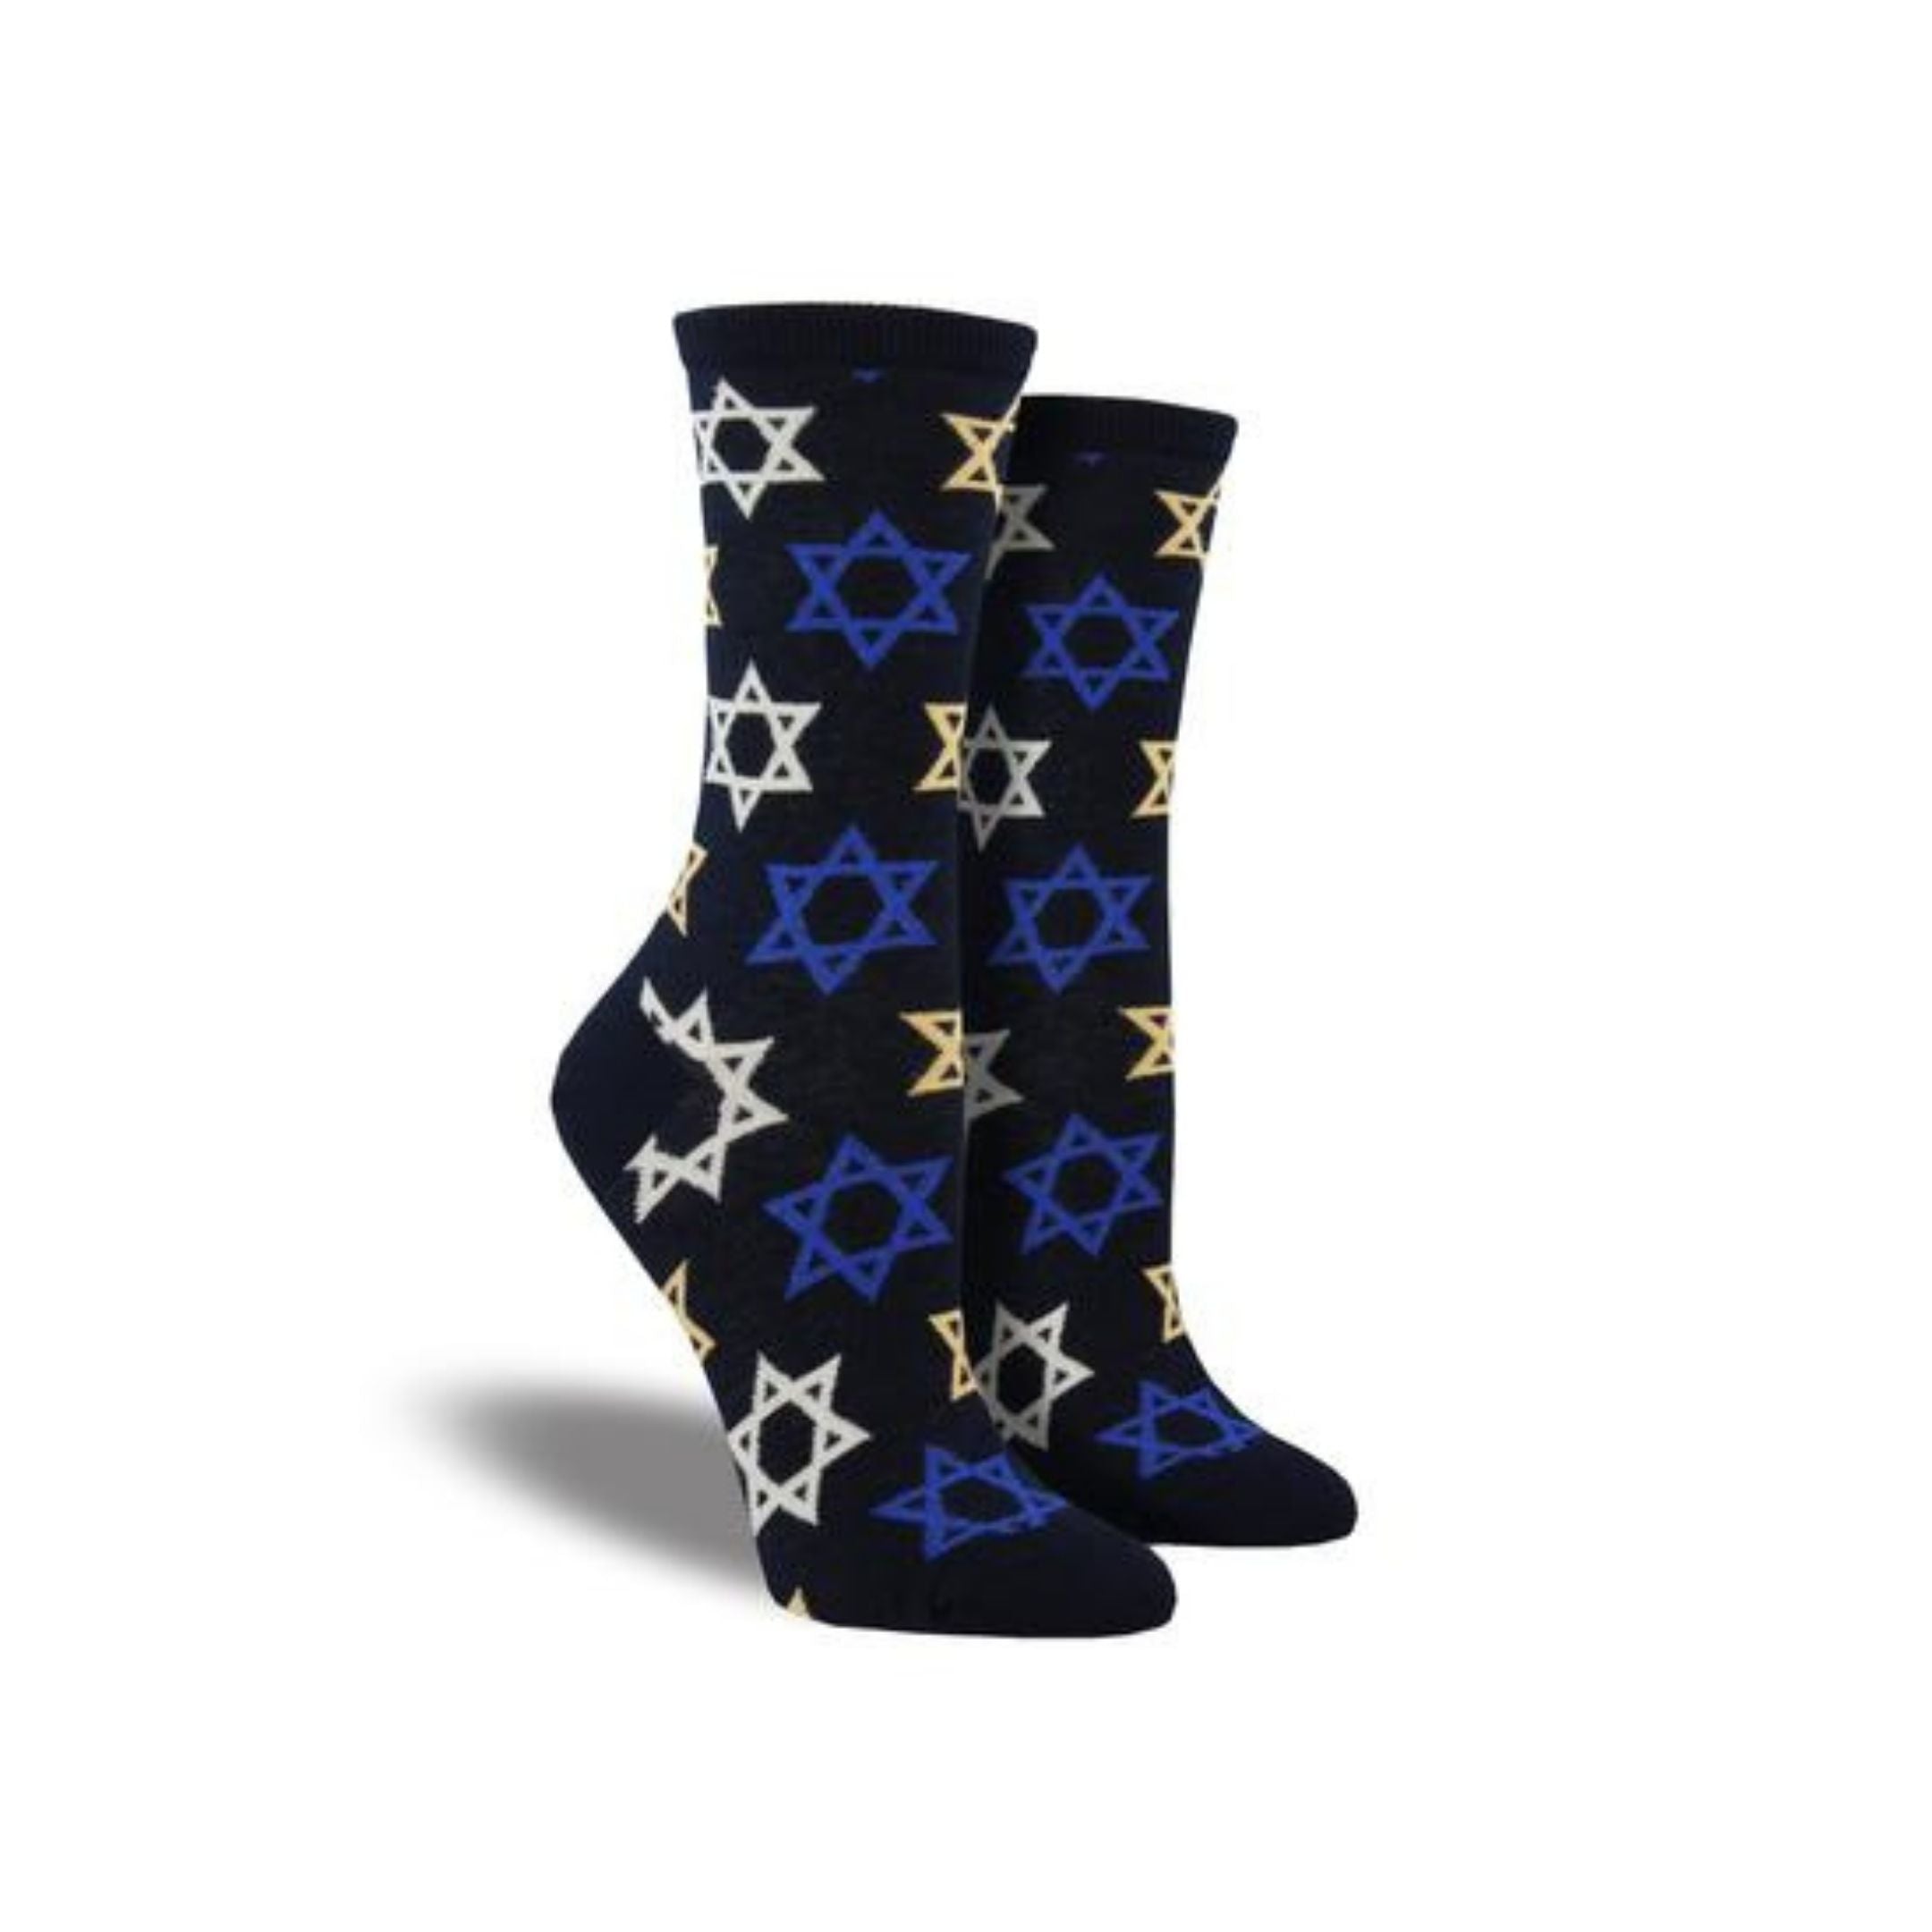 Black socks featuring the Star of David pattern